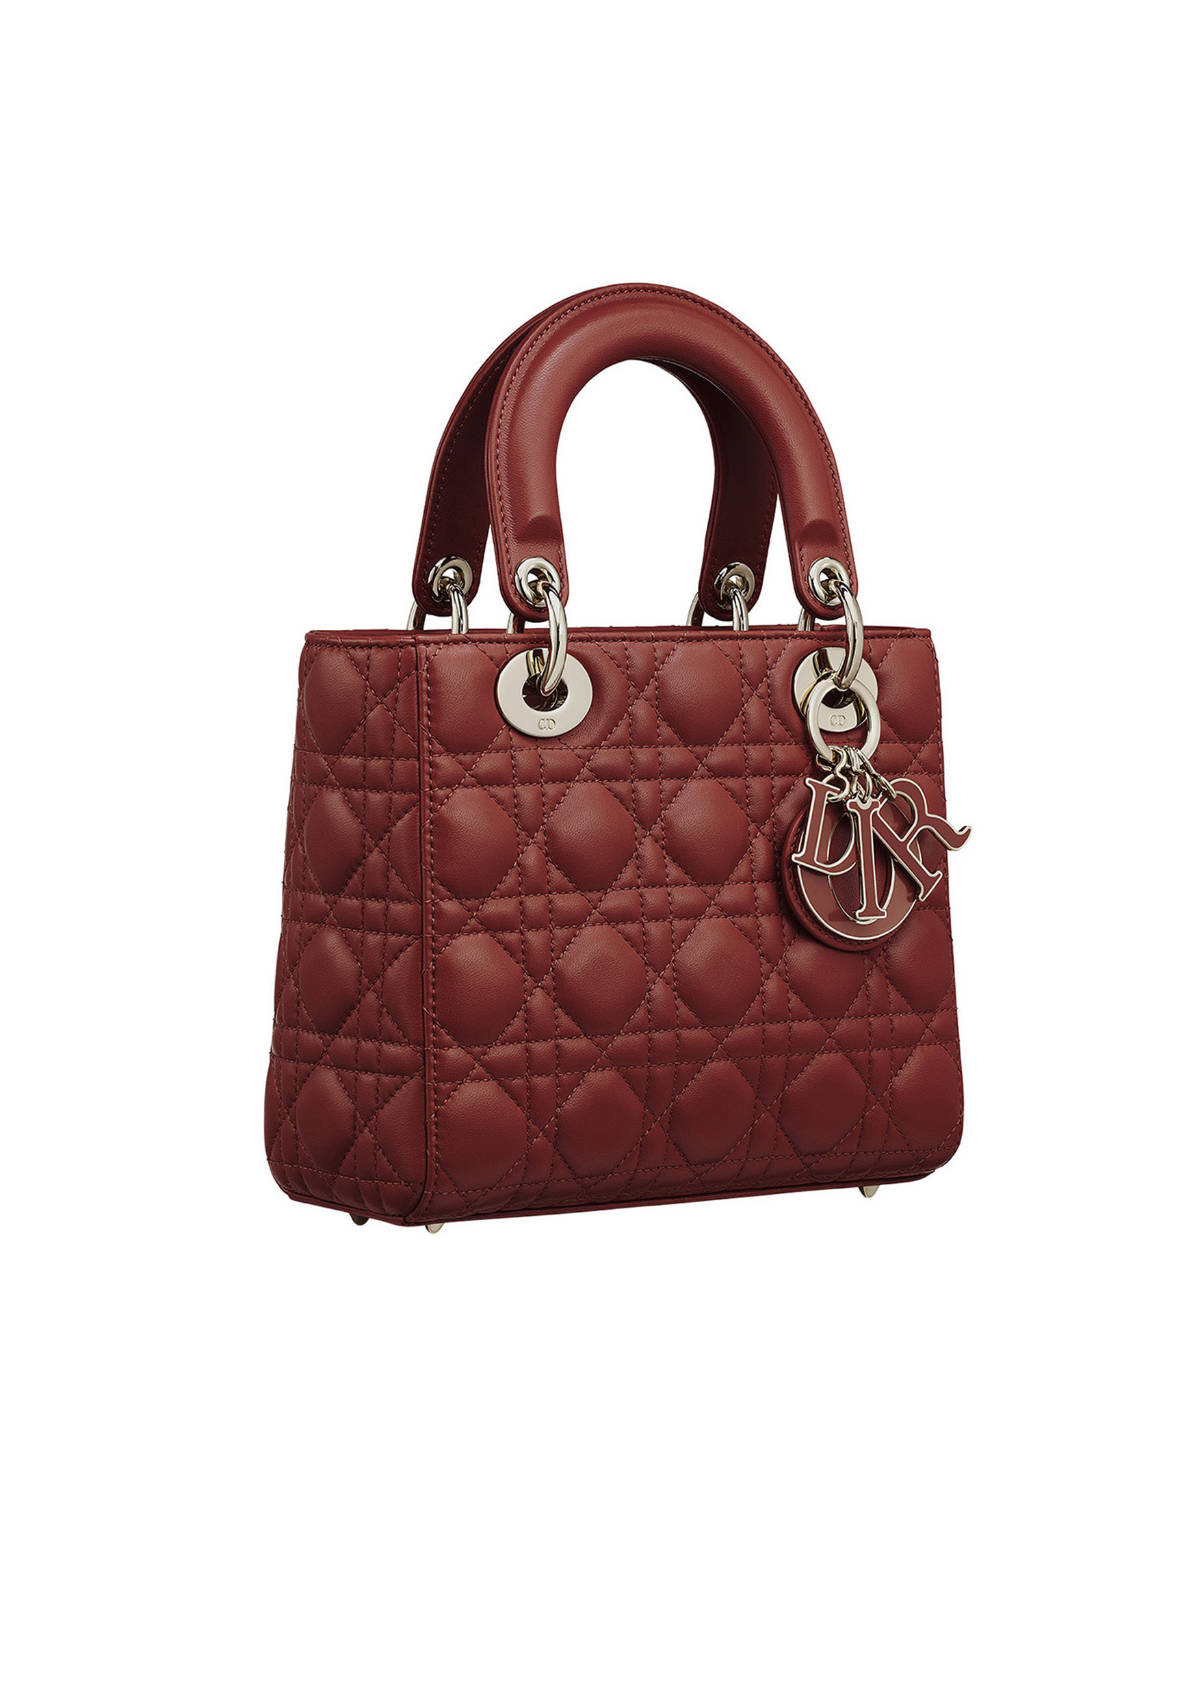 Dior Bobby Bag — Handbags for Women - Christmas